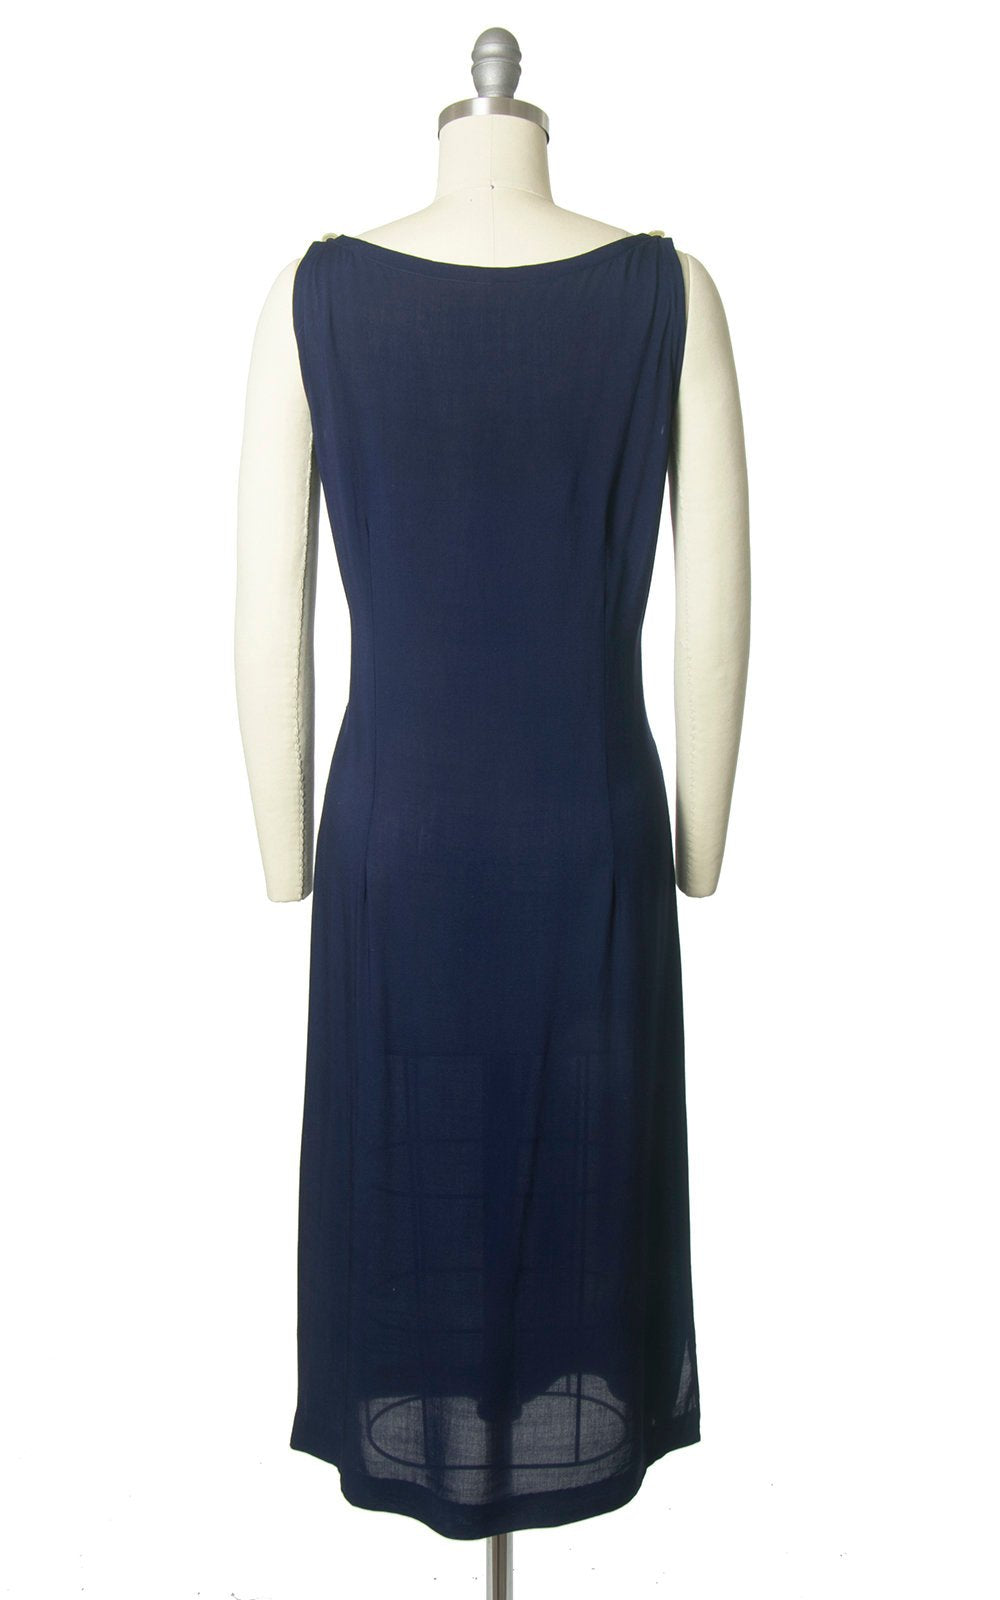 Vintage 1950s Dress | 50s Navy Blue Cotton Sundress Button Up Wiggle Sheath Day Dress (small)